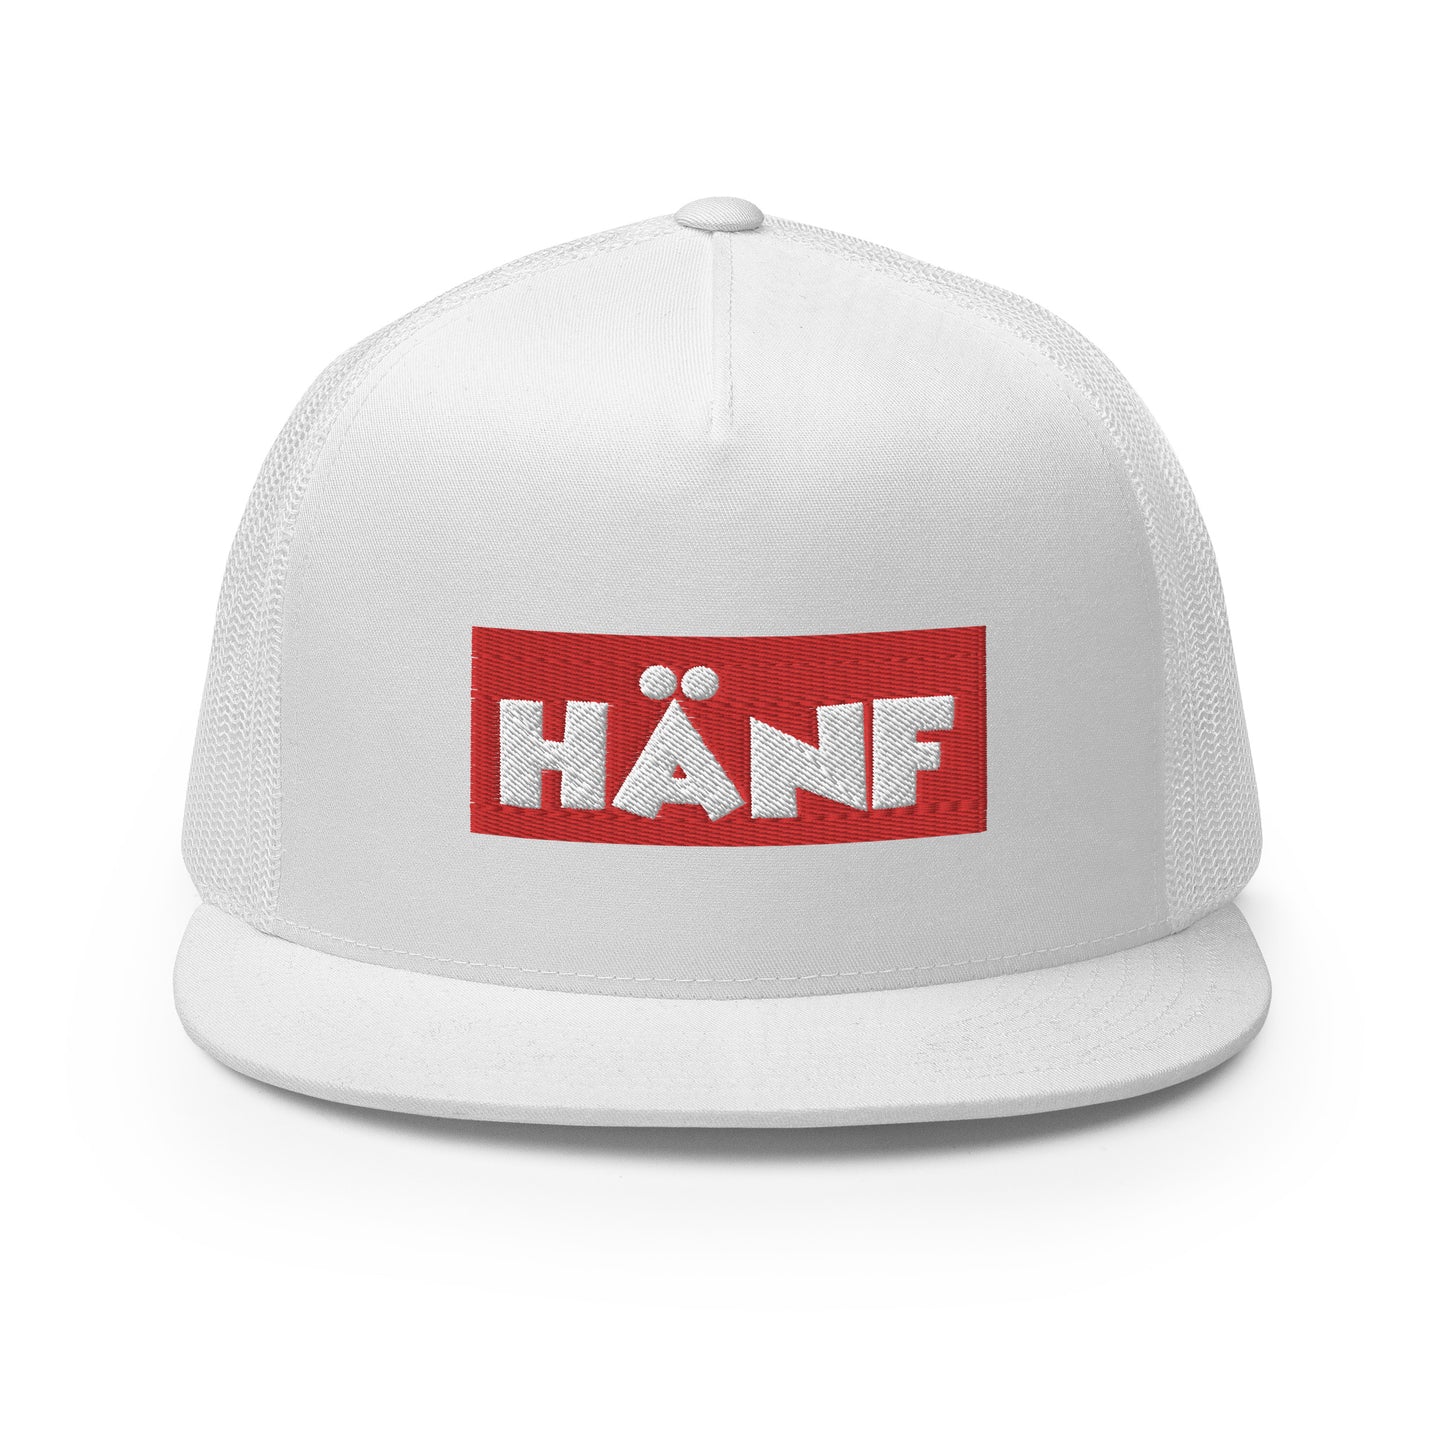 Hanf Brand / #01 / Hat / Trucker Cap Red Box